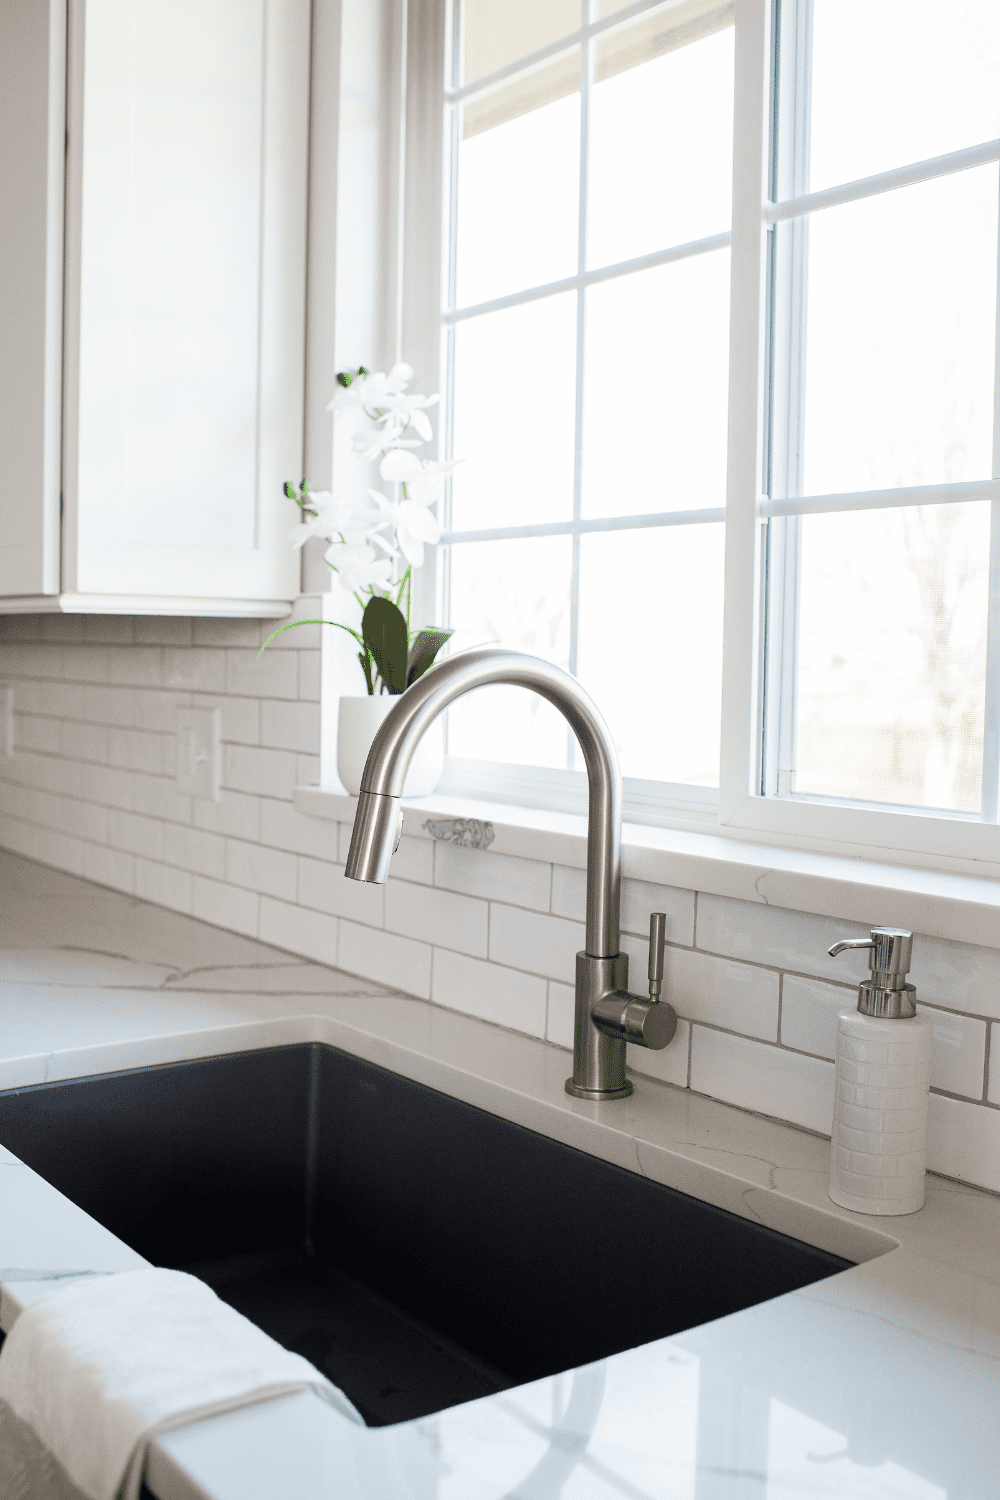 Nicholas Design Build | A white kitchen with a black sink.